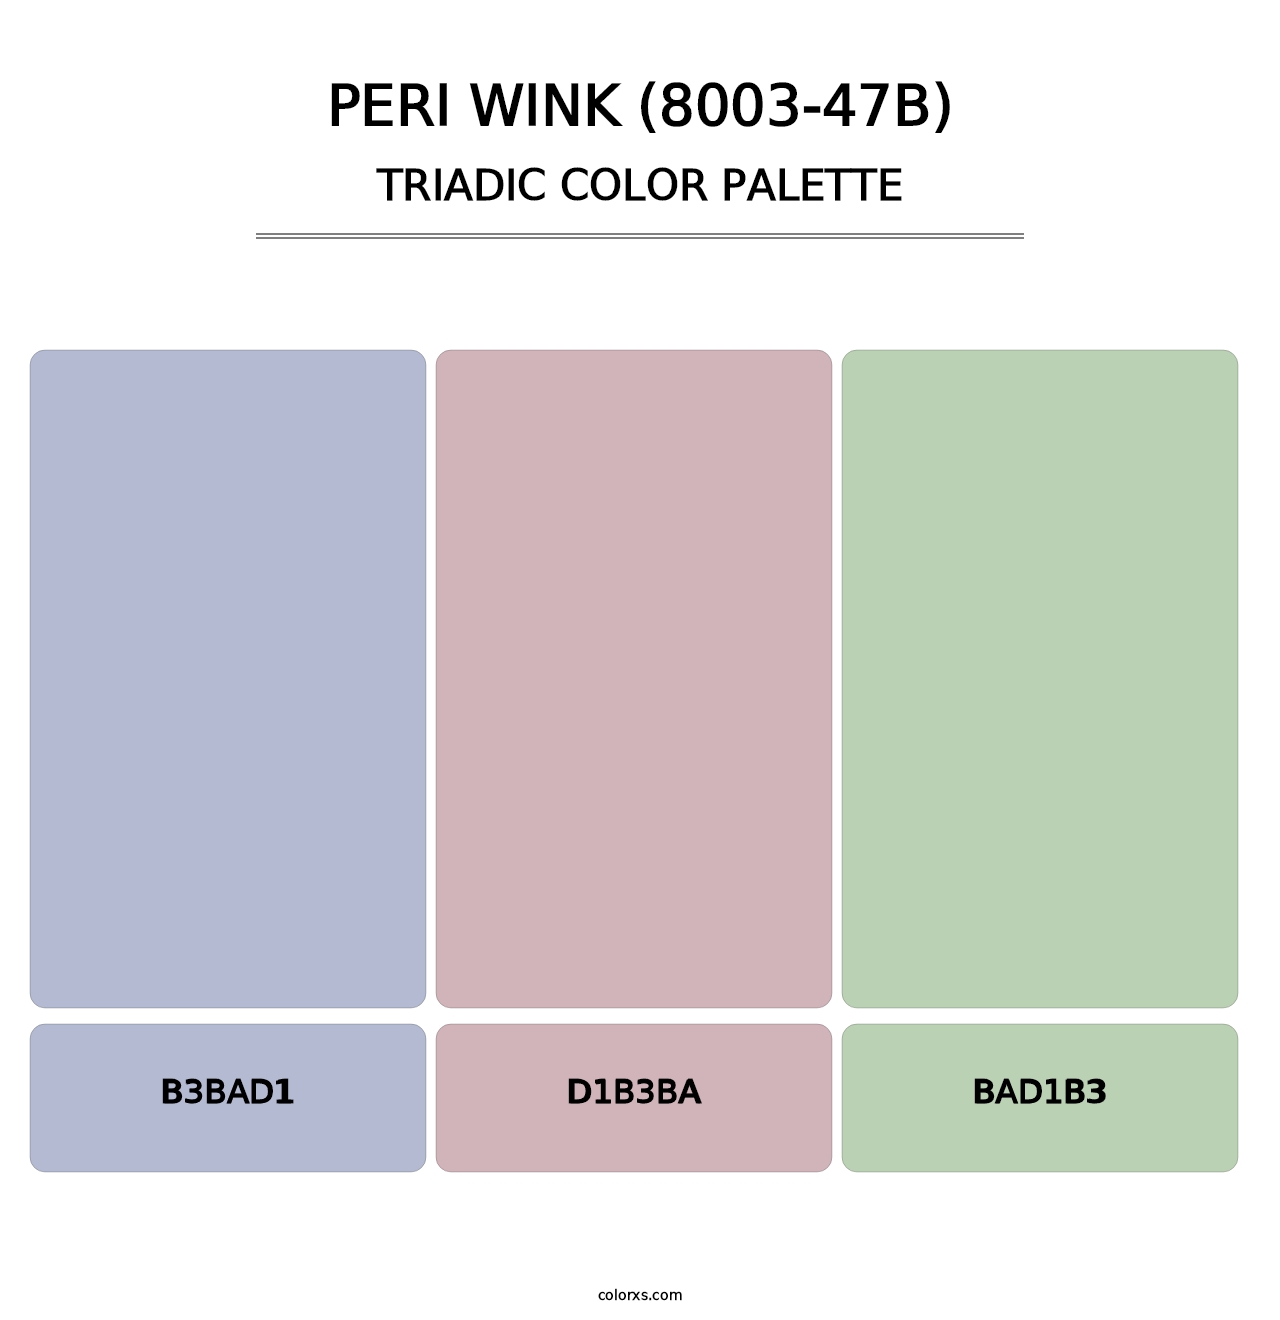 Peri Wink (8003-47B) - Triadic Color Palette